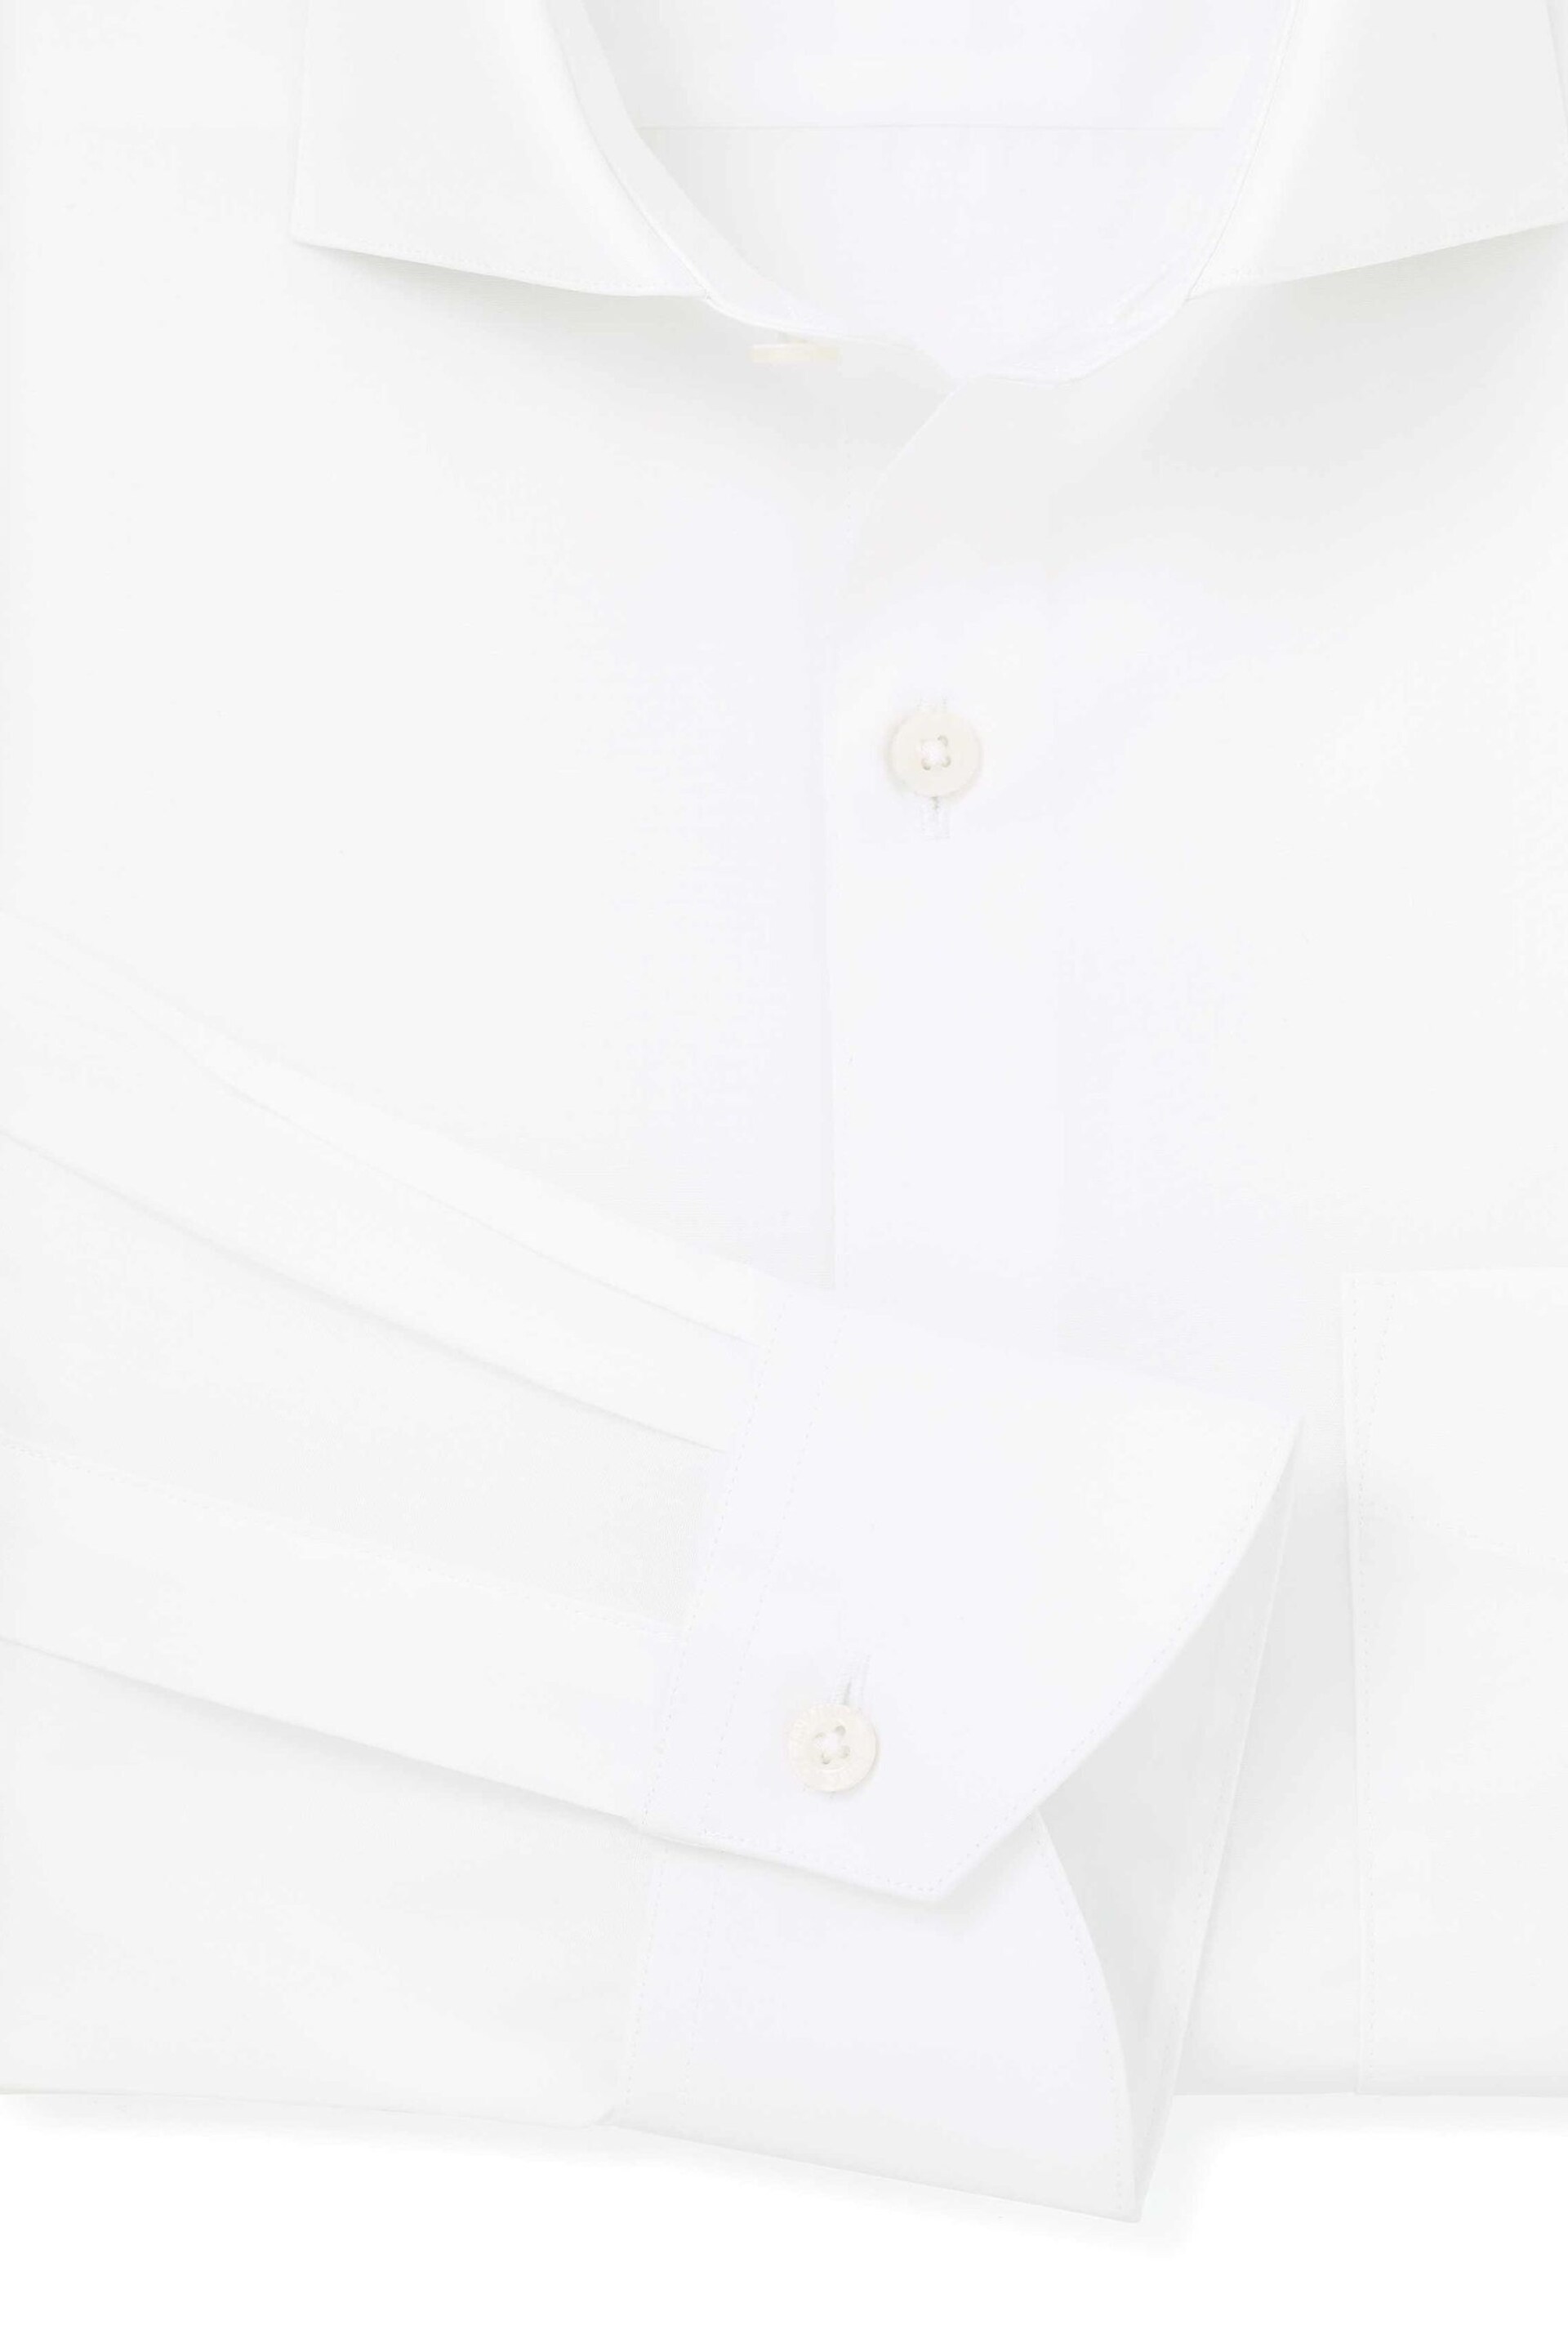 Savile Row Company Classic Fit Single Cuff Formal White Shirt - Image 7 of 7